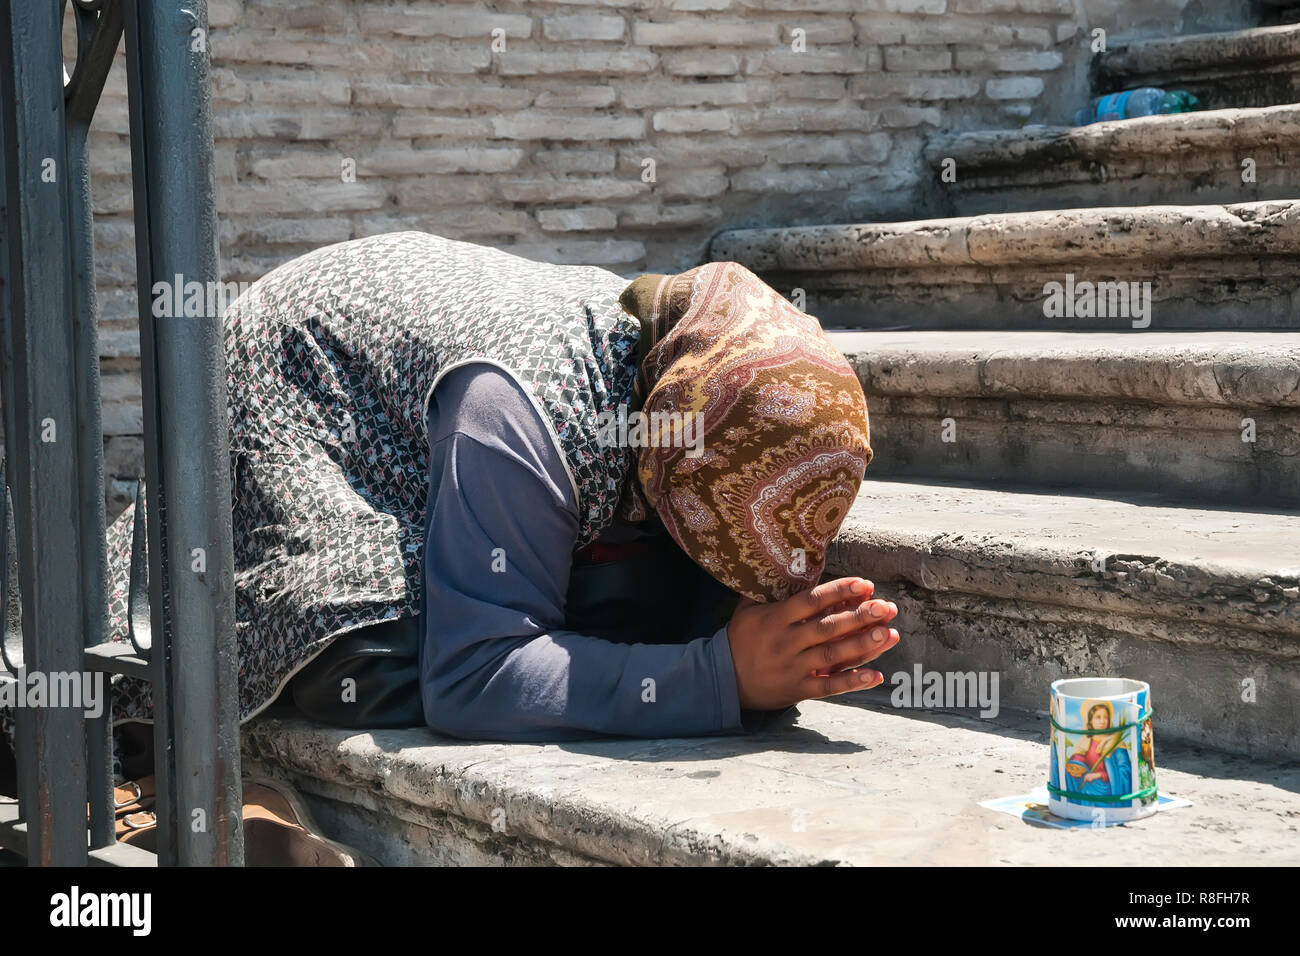 Beggar in Rome - female street beggar in prayer pose Stock Photo